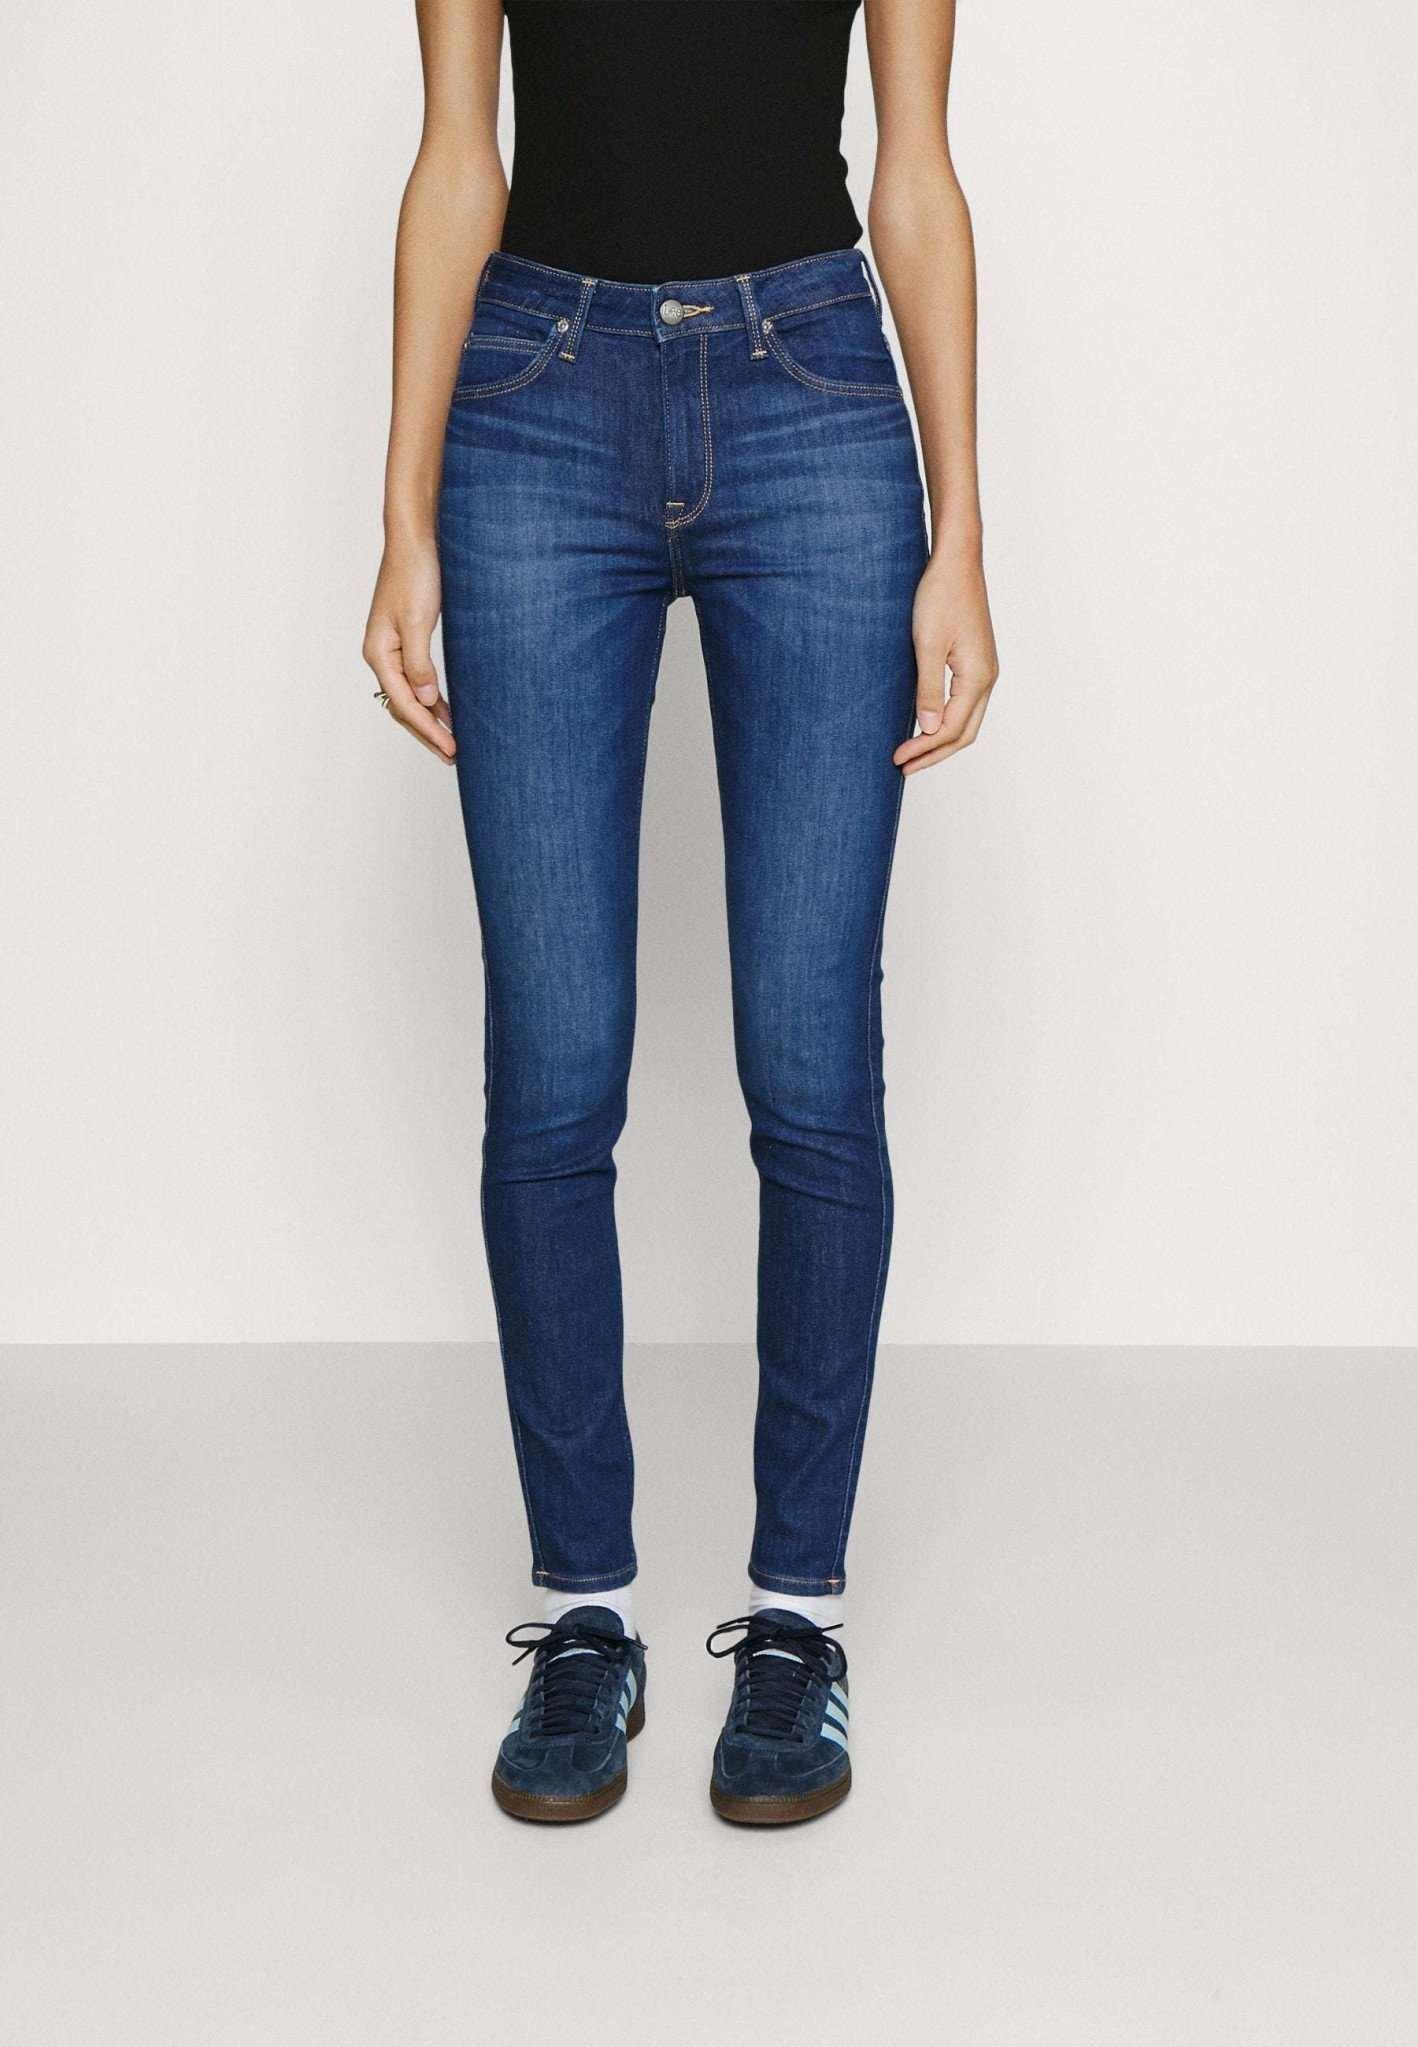 Jeans Skinny Fit Scarlett High Damen Blau L31/W27 von Lee